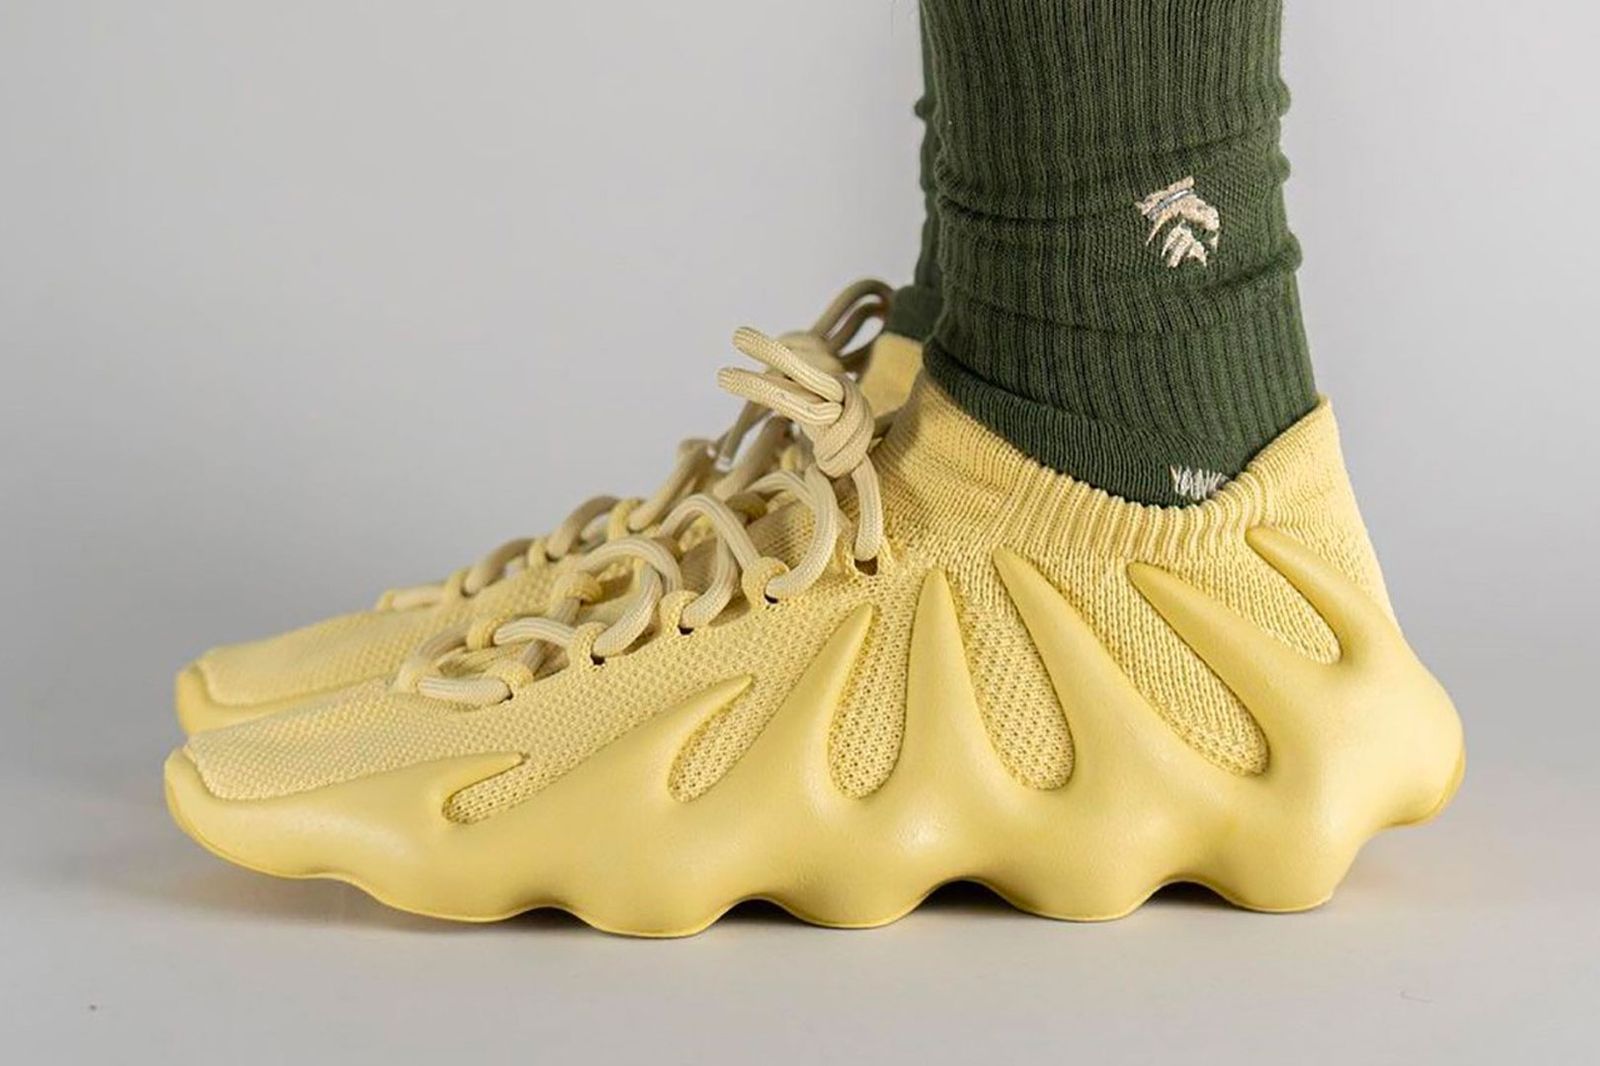 adidas Yeezy 450 "Sulfur" on-foot image of yellow PrimeKnit sneakers.